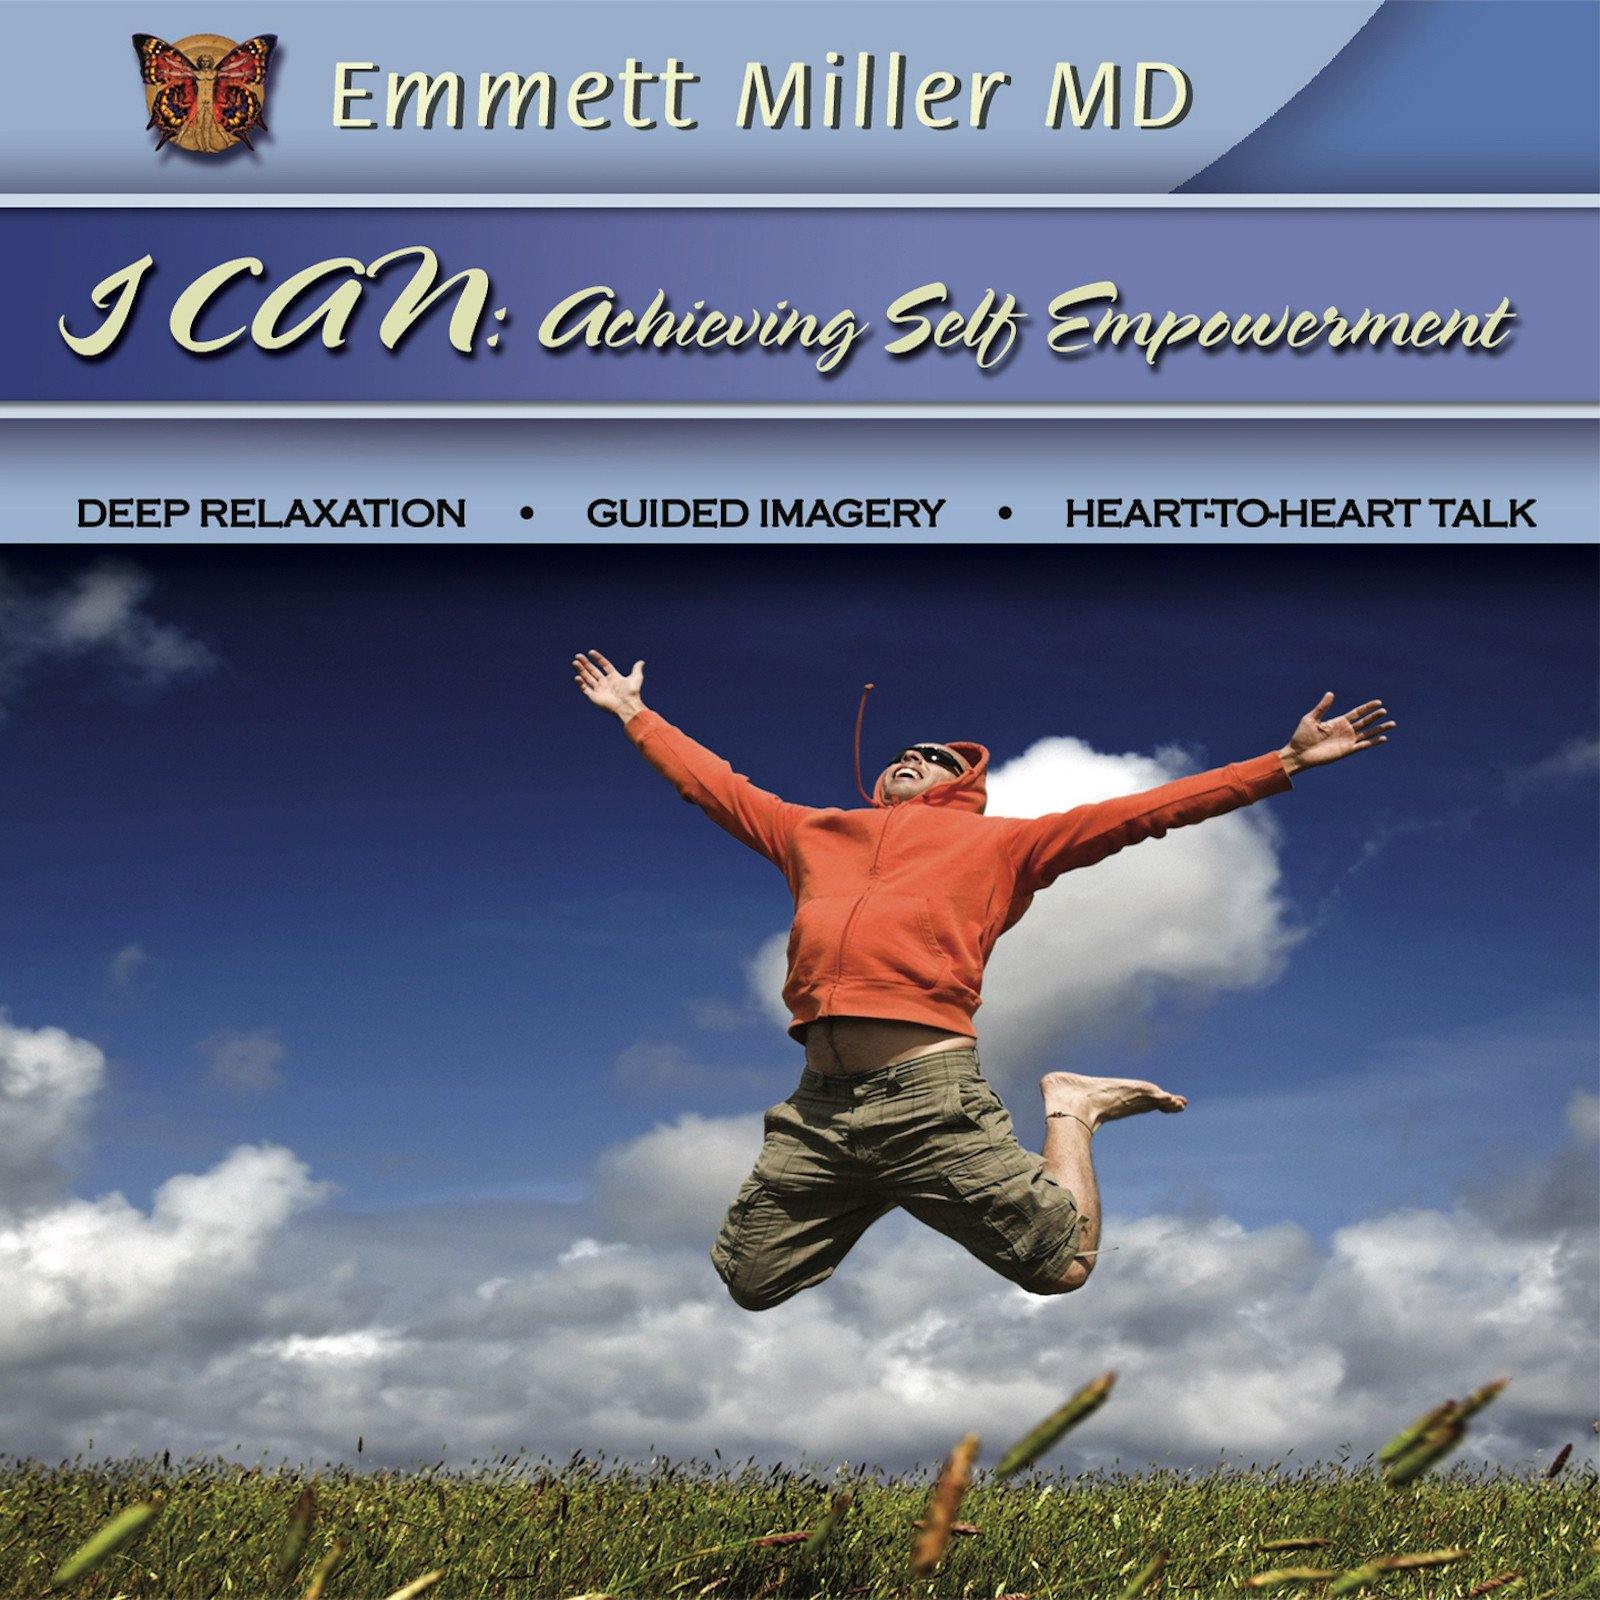 I Can: Achieving Self-Empowerment with Dr. Emmett Miller Audio Program Dr. Emmett Miller - BetterListen!